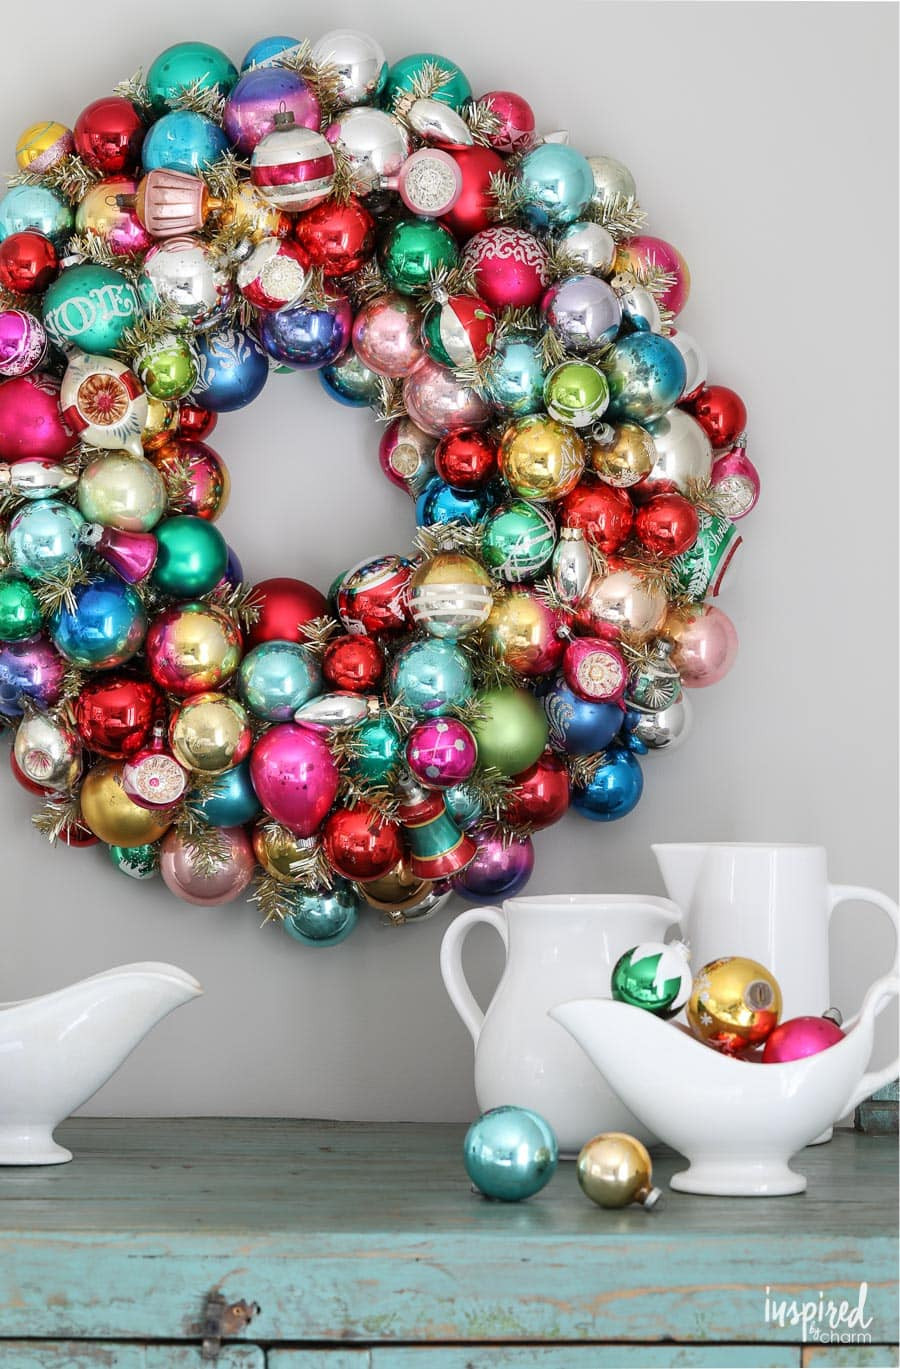 DIY Christmas Ornament Wreath
 How to Make a DIY Vintage Christmas Ornament Wreath